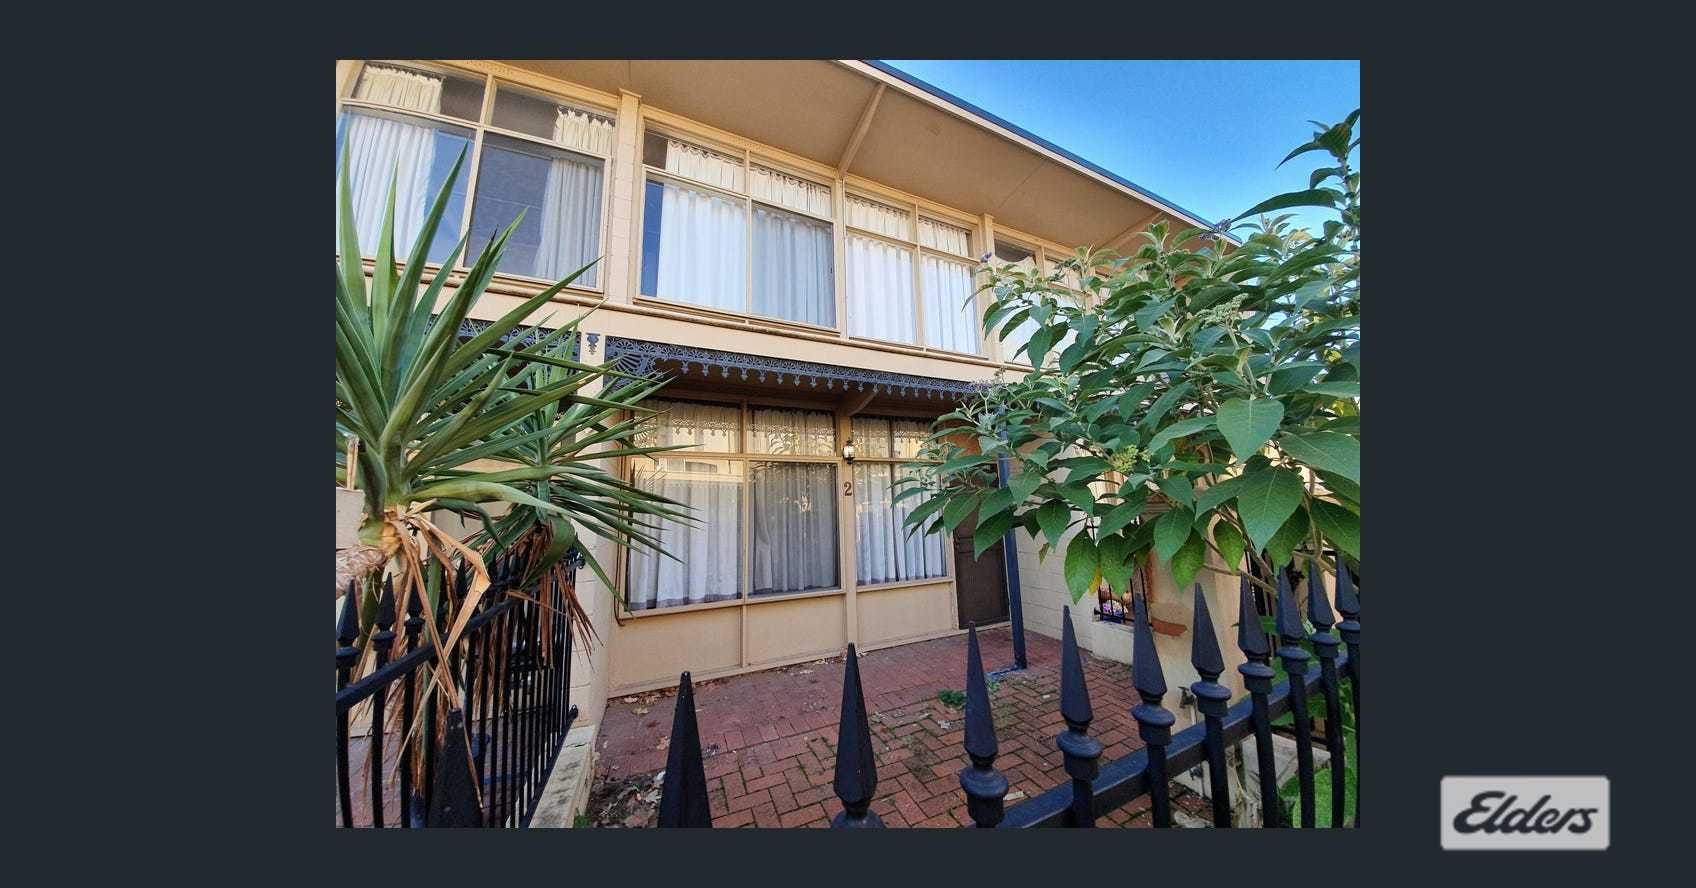 2 bedrooms Apartment / Unit / Flat in 2/750 Macauley Street ALBURY NSW, 2640